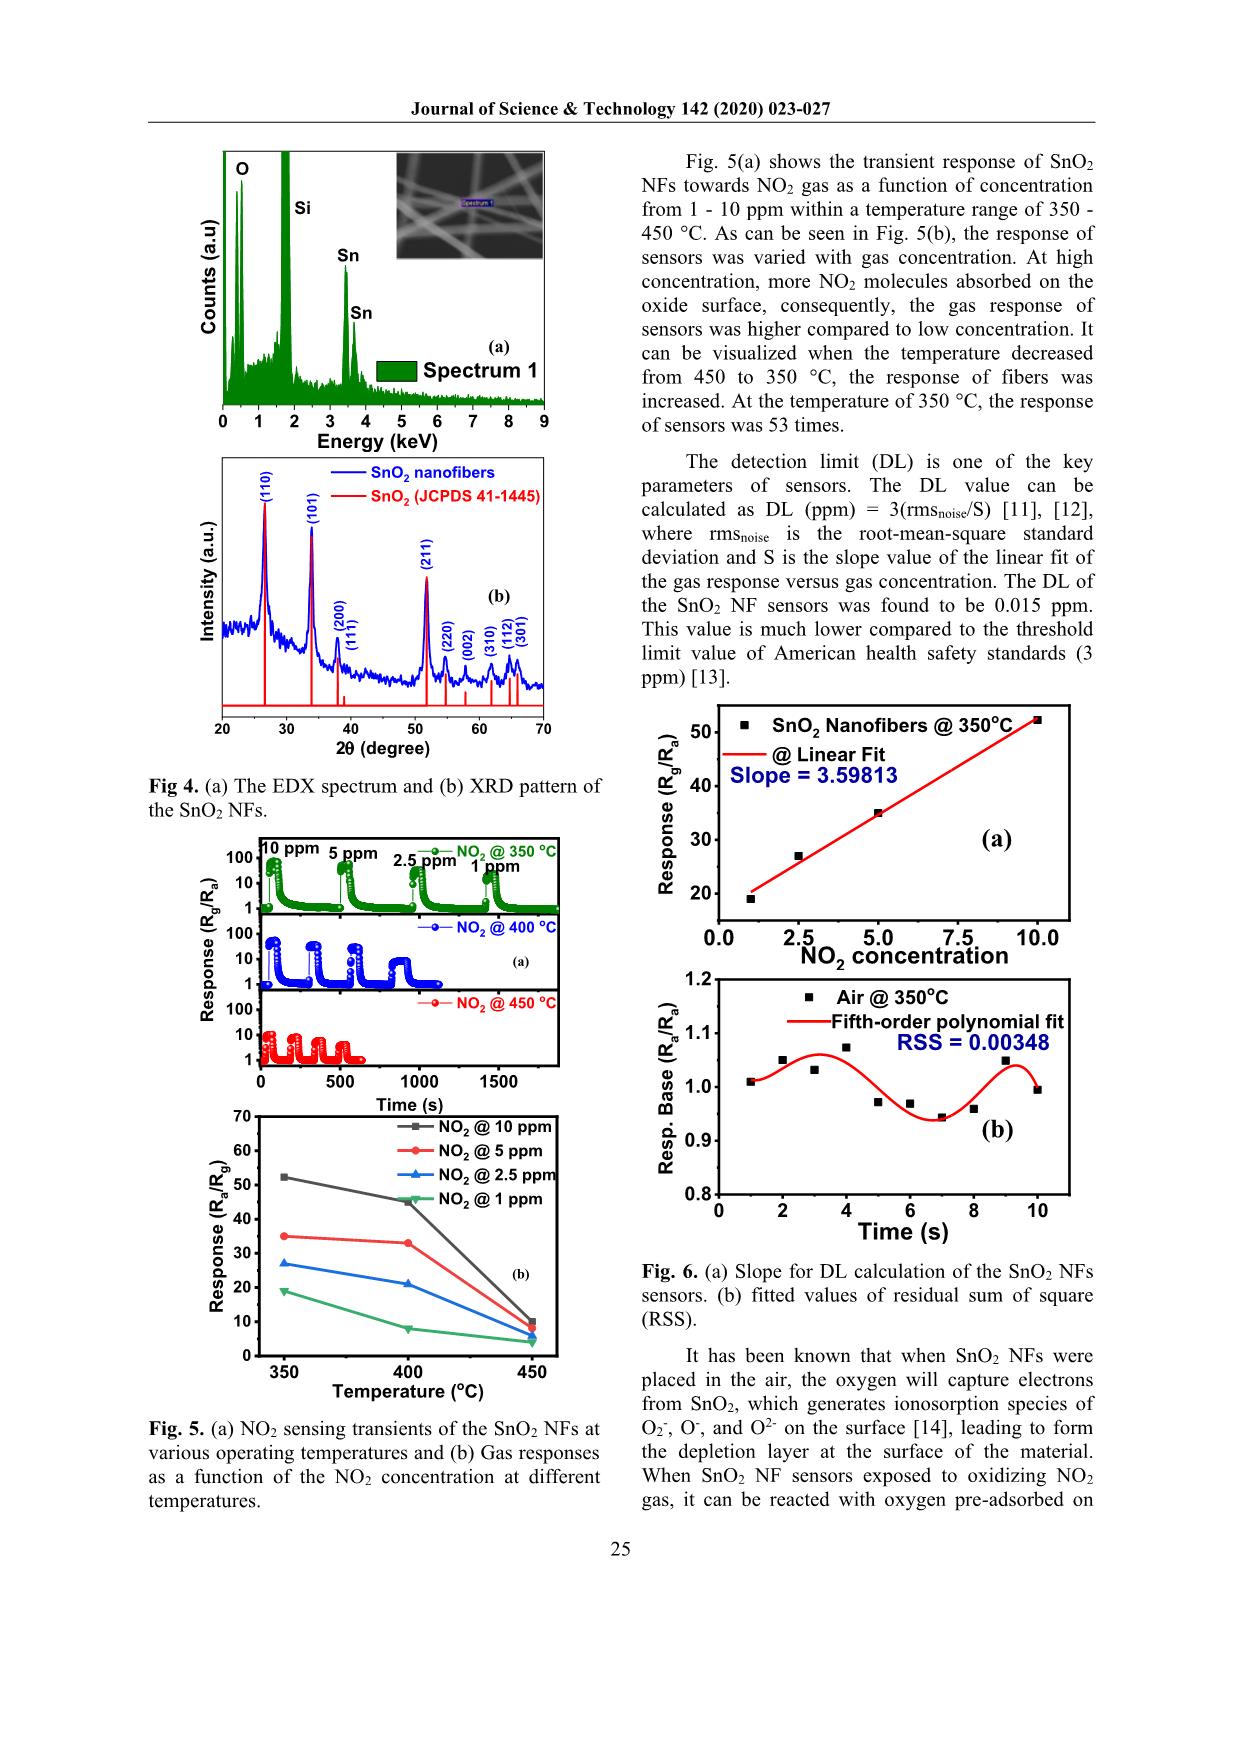 NO2 gas sensing characteristics of SNO2 nanofiber - based sensors trang 3